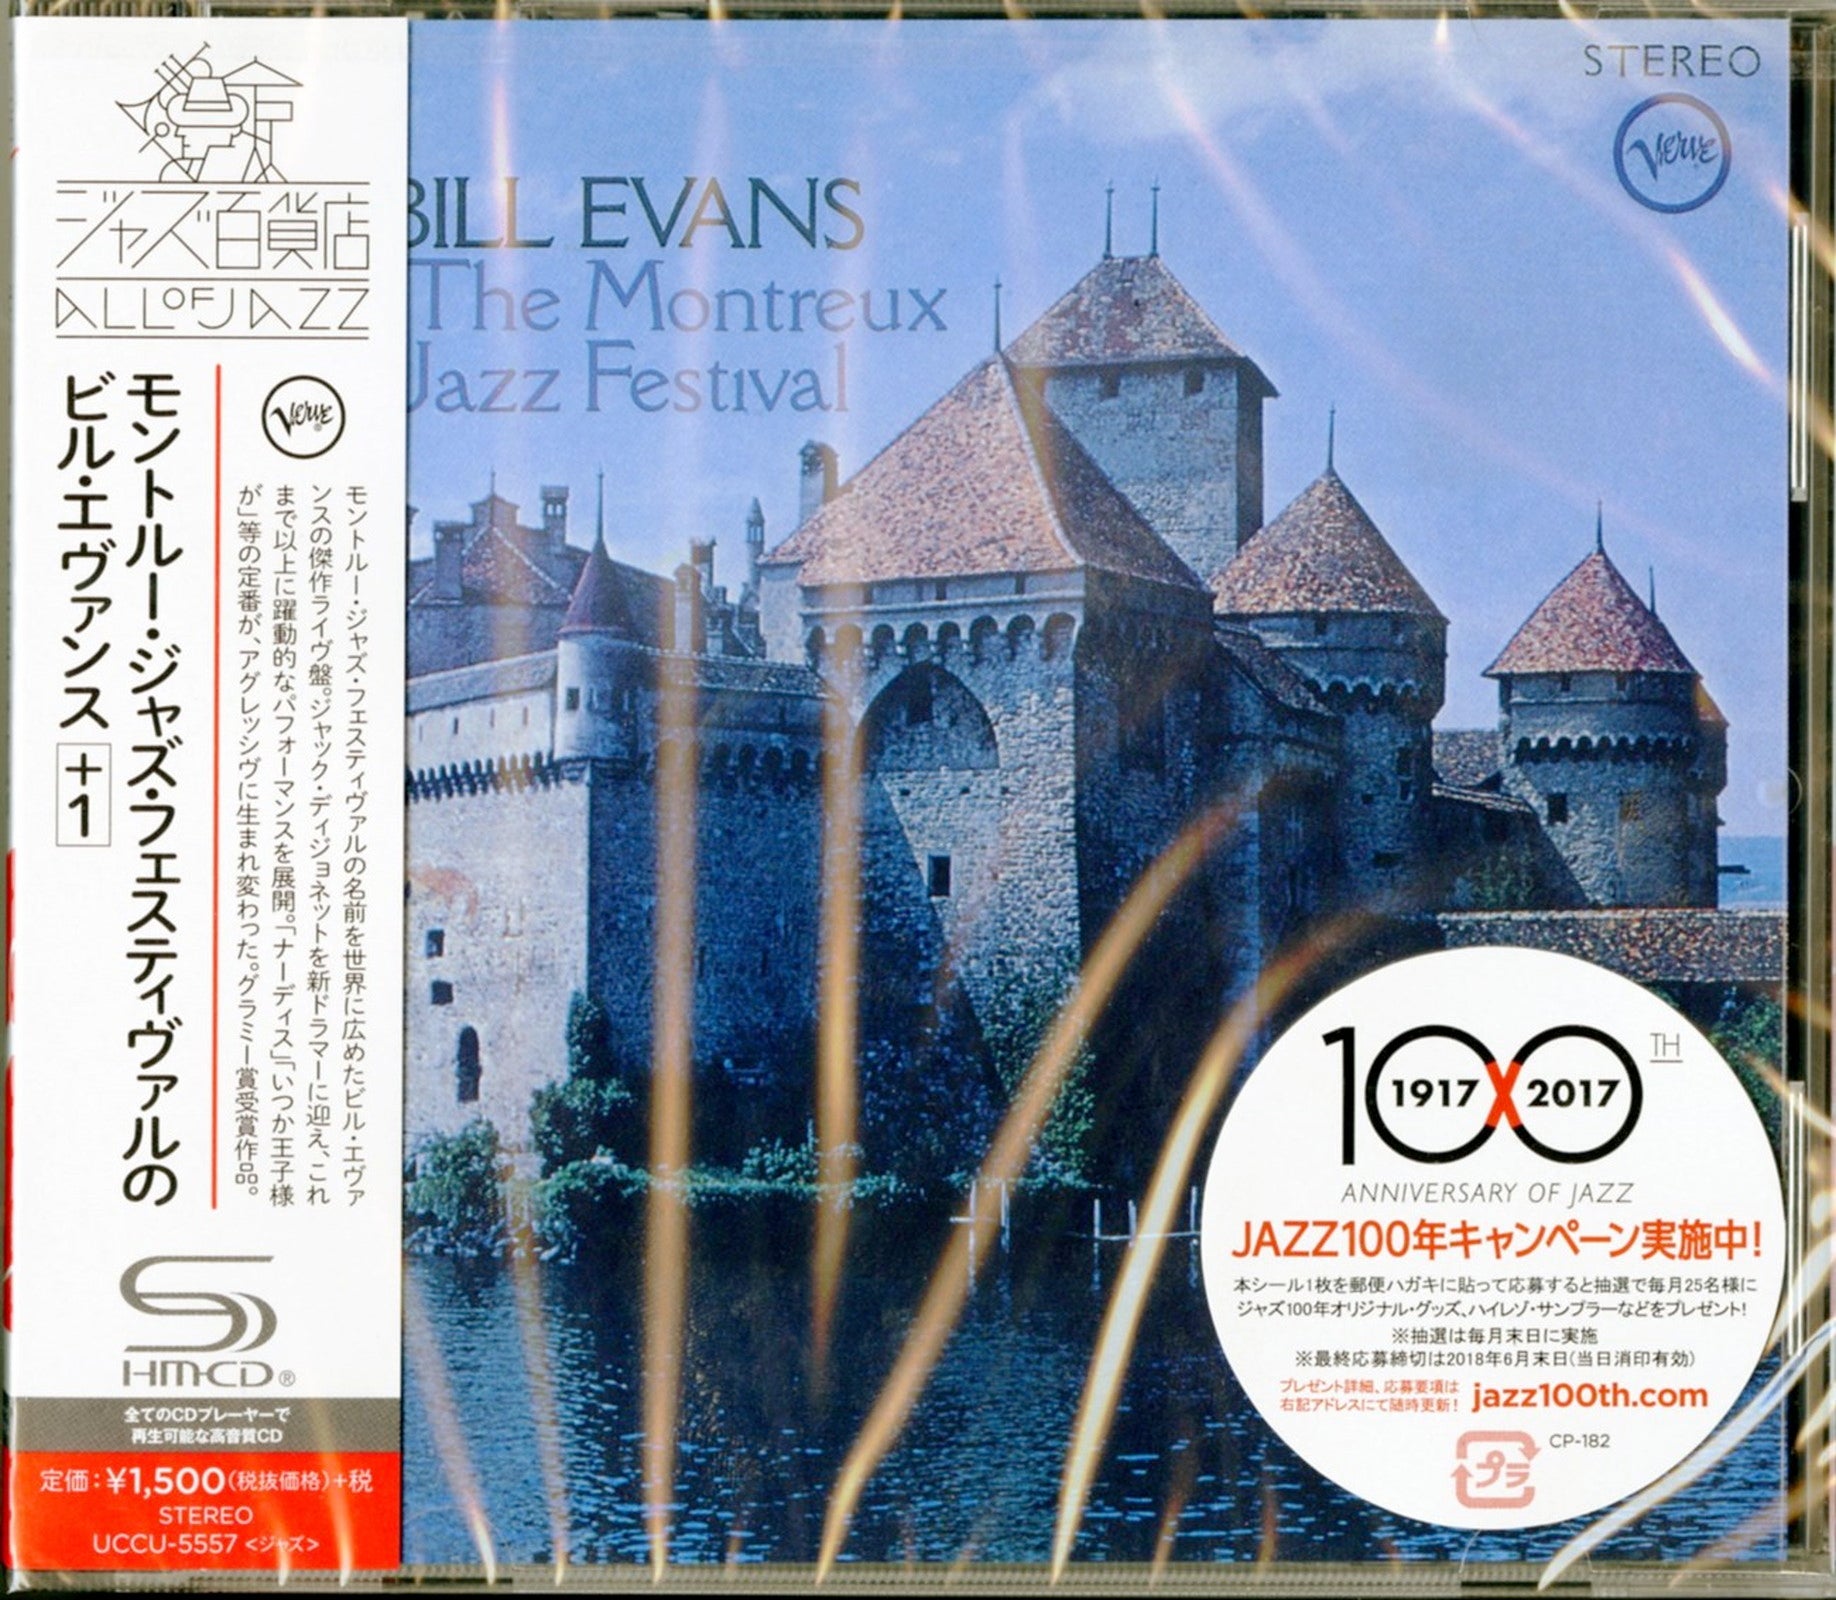 Bill Evans - At The Montreux Jazz Festival - Japan SHM-CD